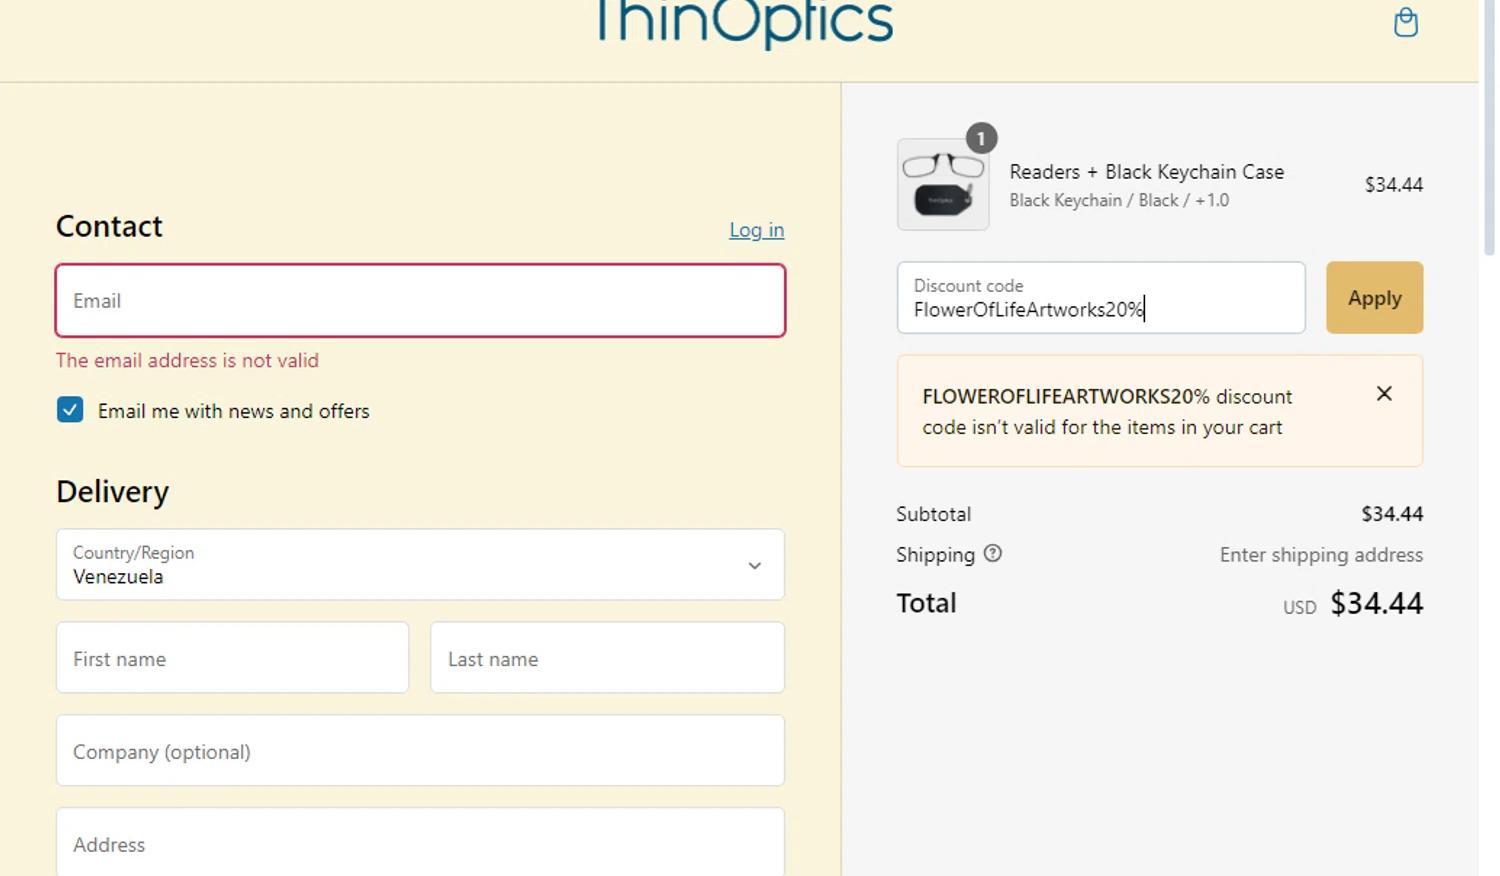 ThinOptics apply coupon code